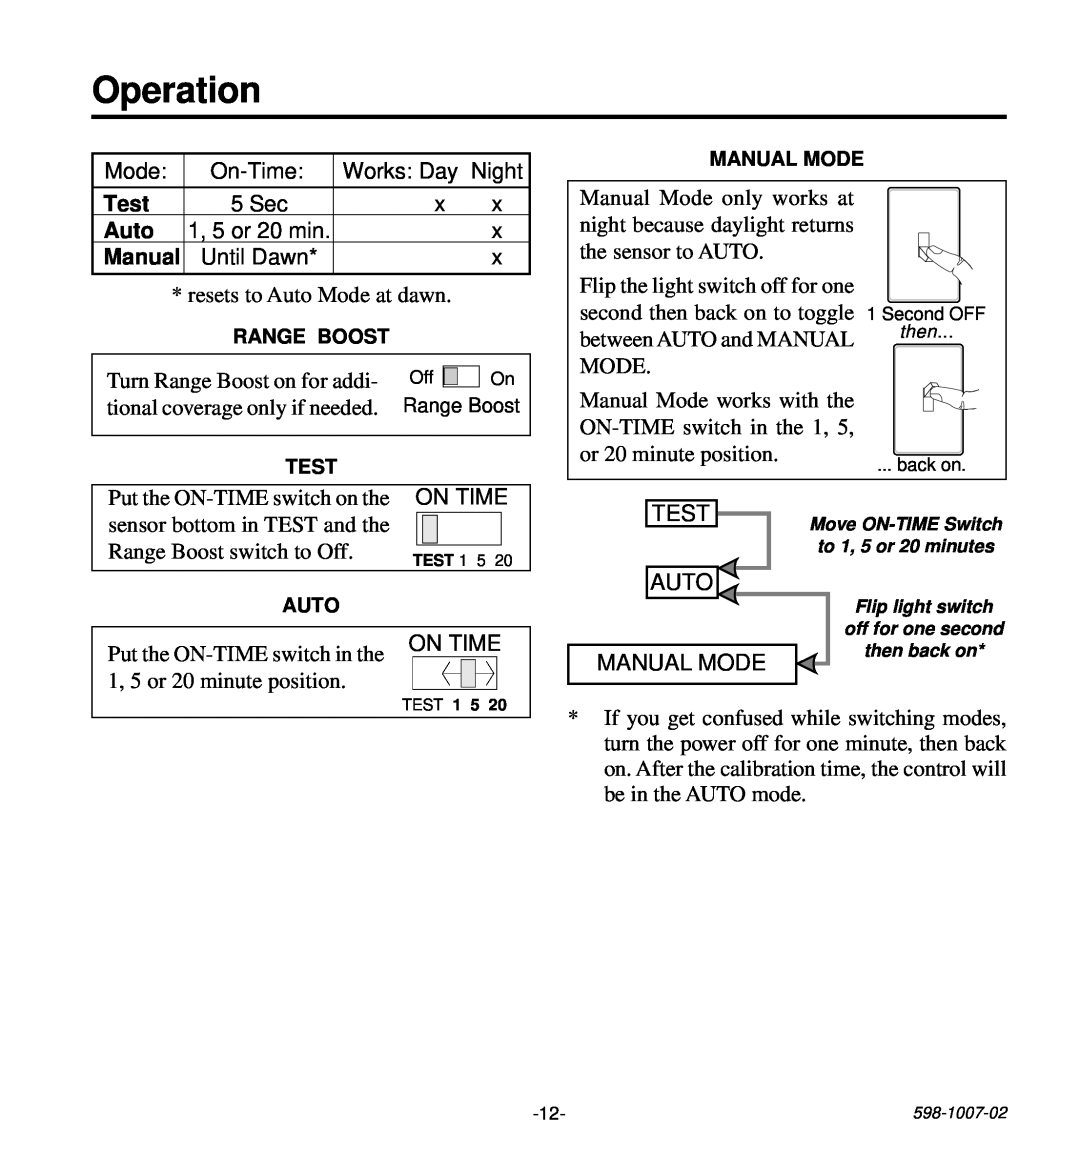 Desa HD-9260 manual Operation, Test, Auto, Manual Mode 